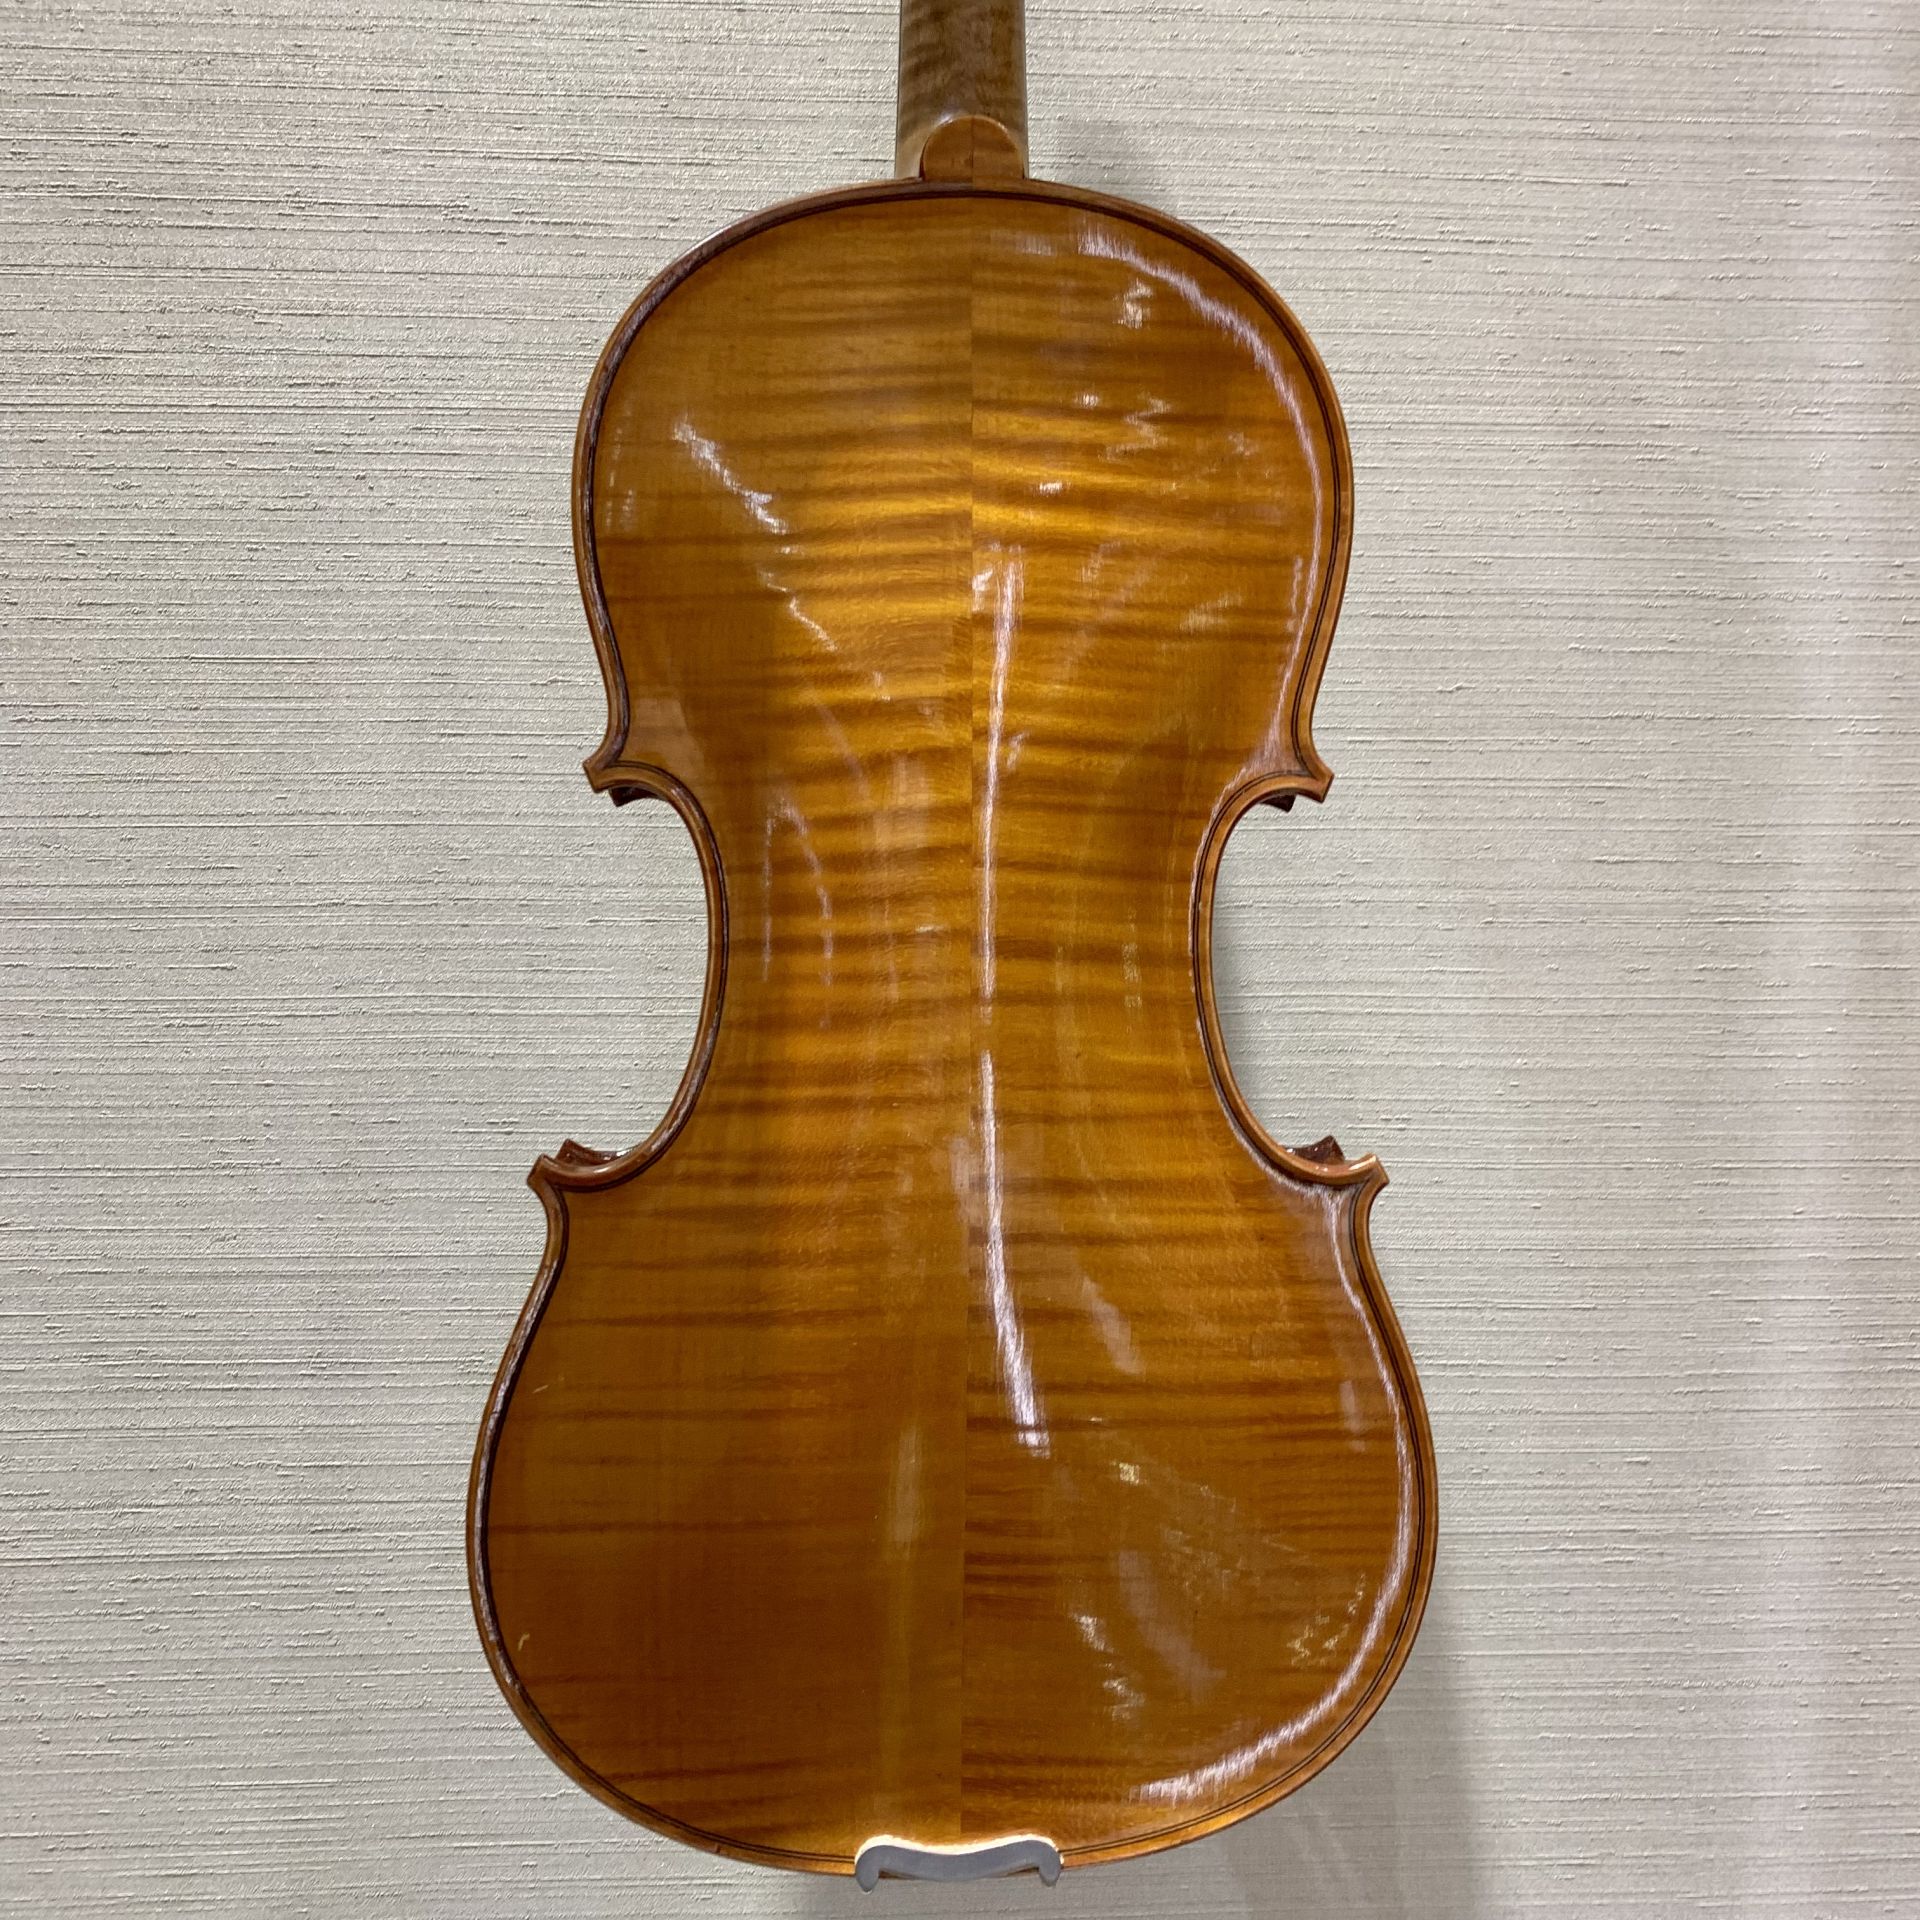 GUSTAV PRAGER バイオリン弓 絶妙なバランス、しなやかで反応◎弦楽器 